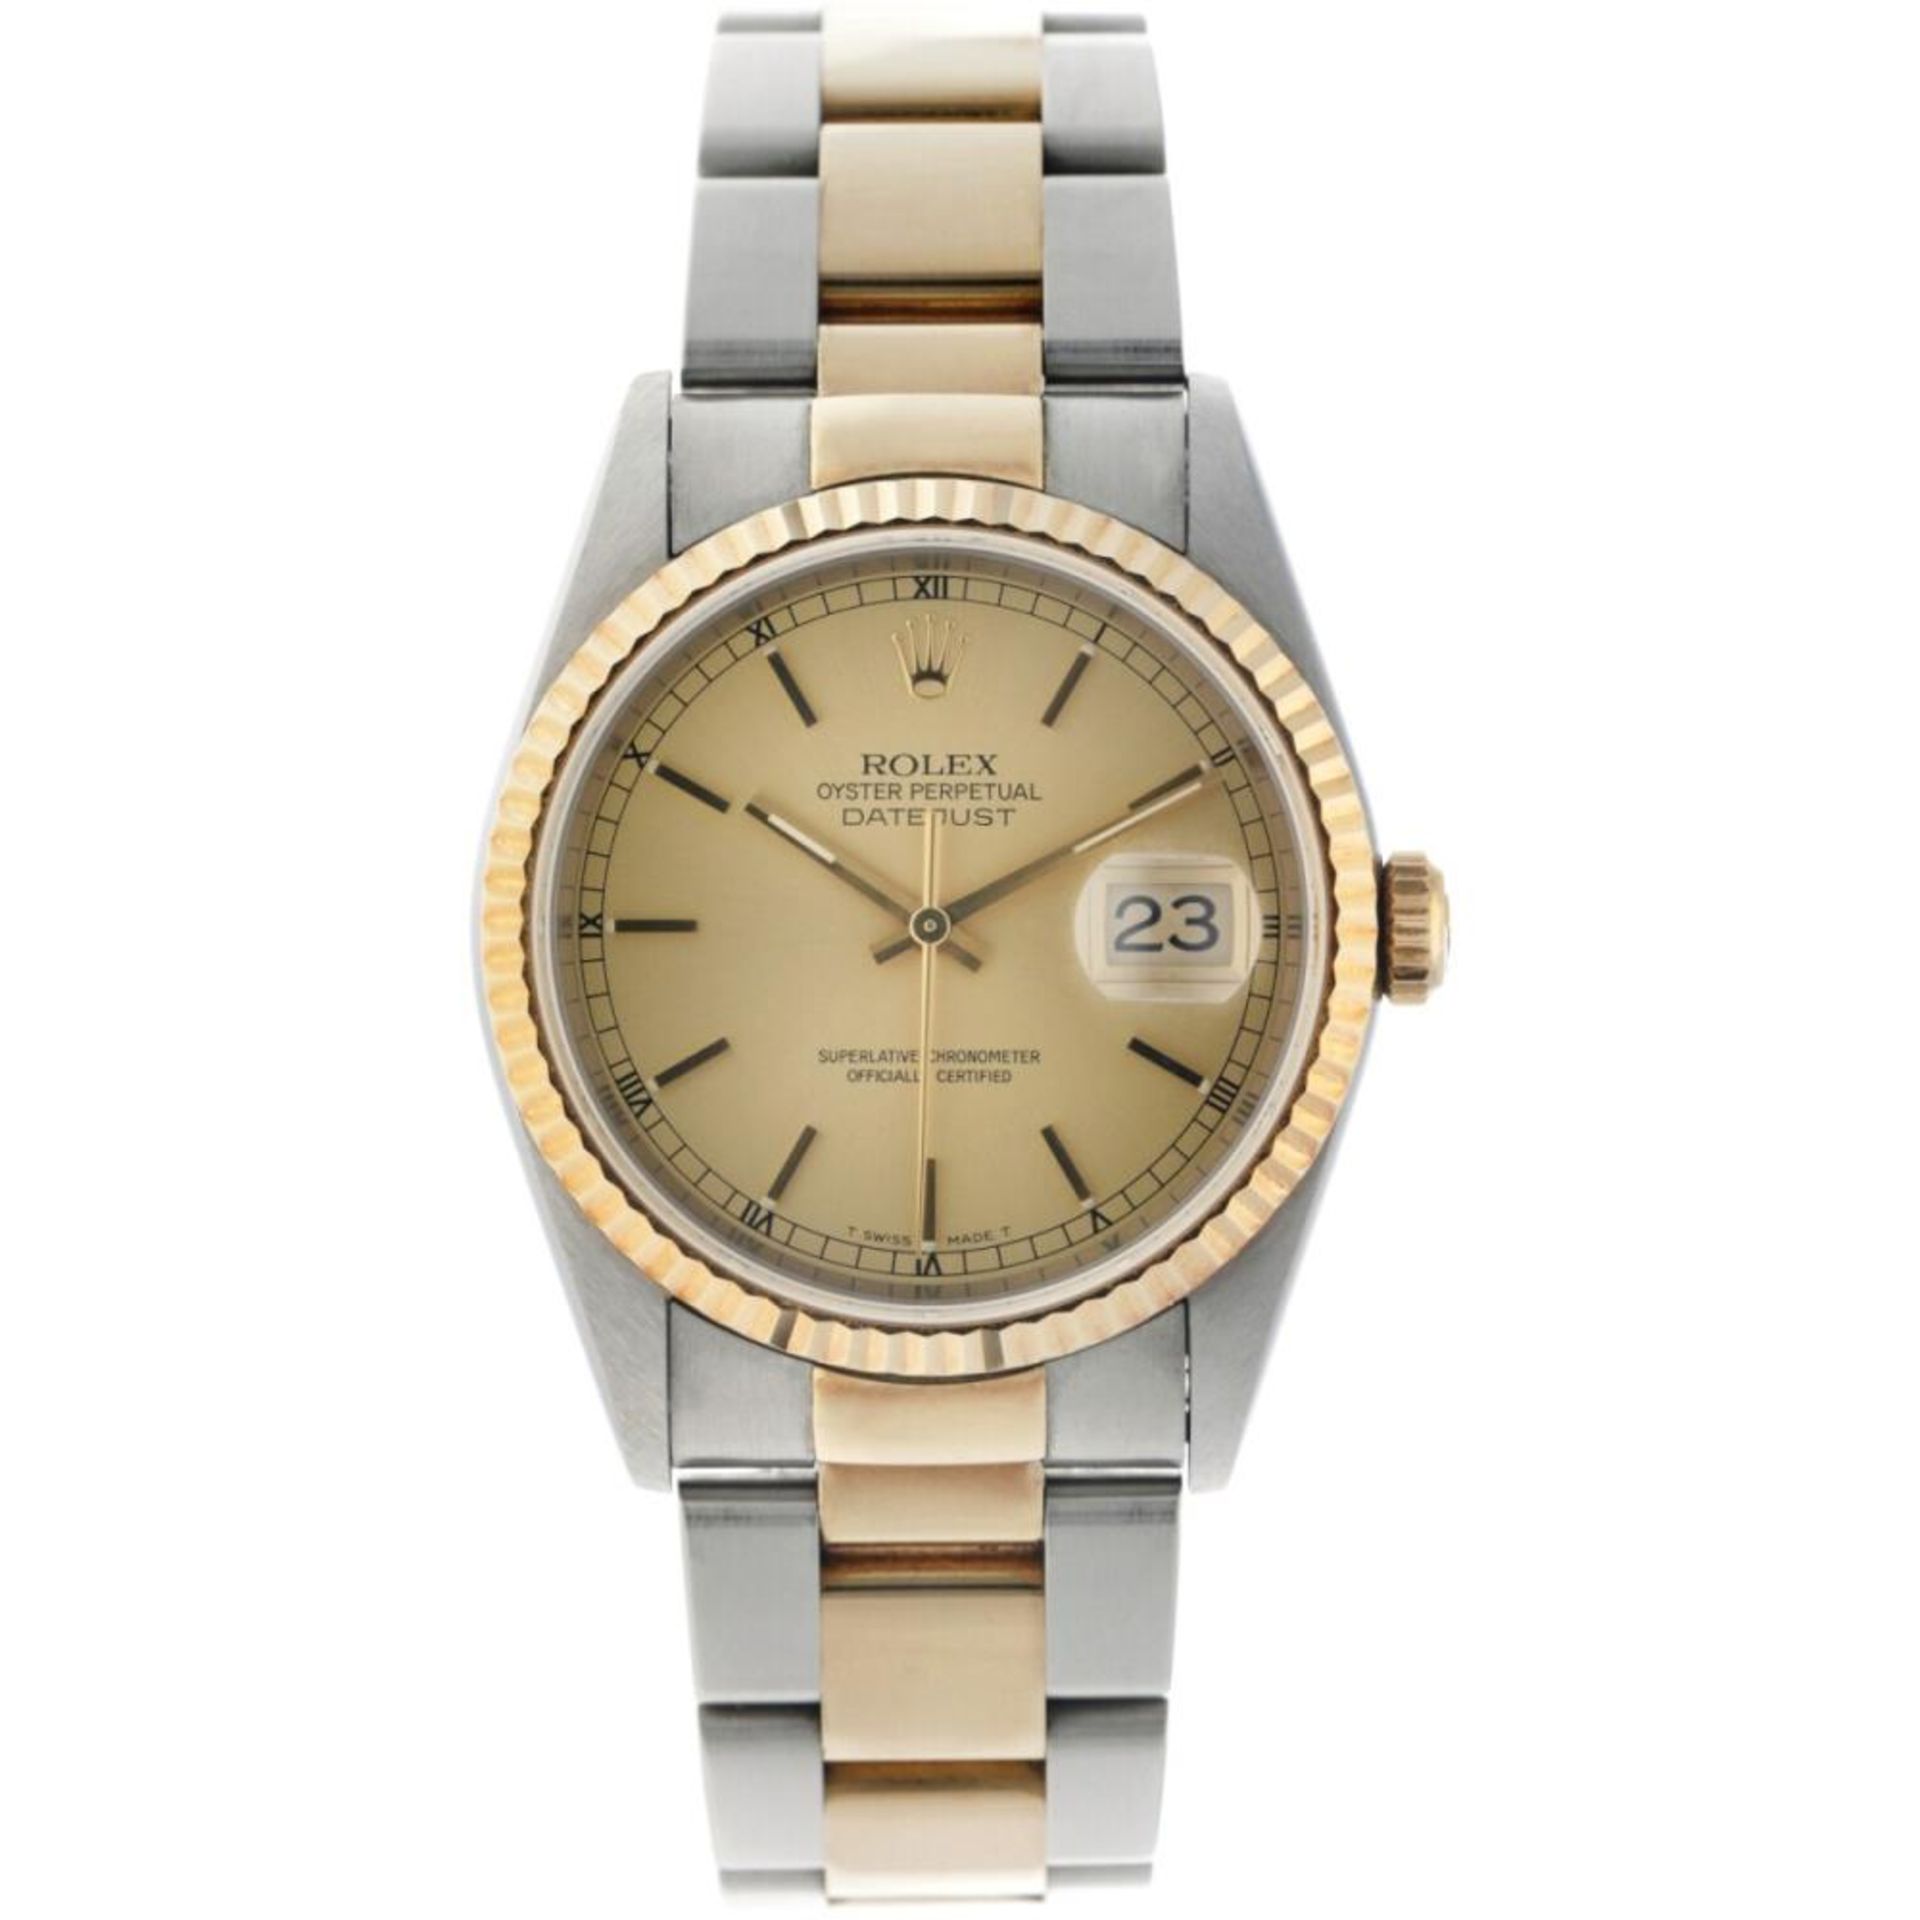 Rolex Datejust 16233 - Men's watch - approx. 1995.